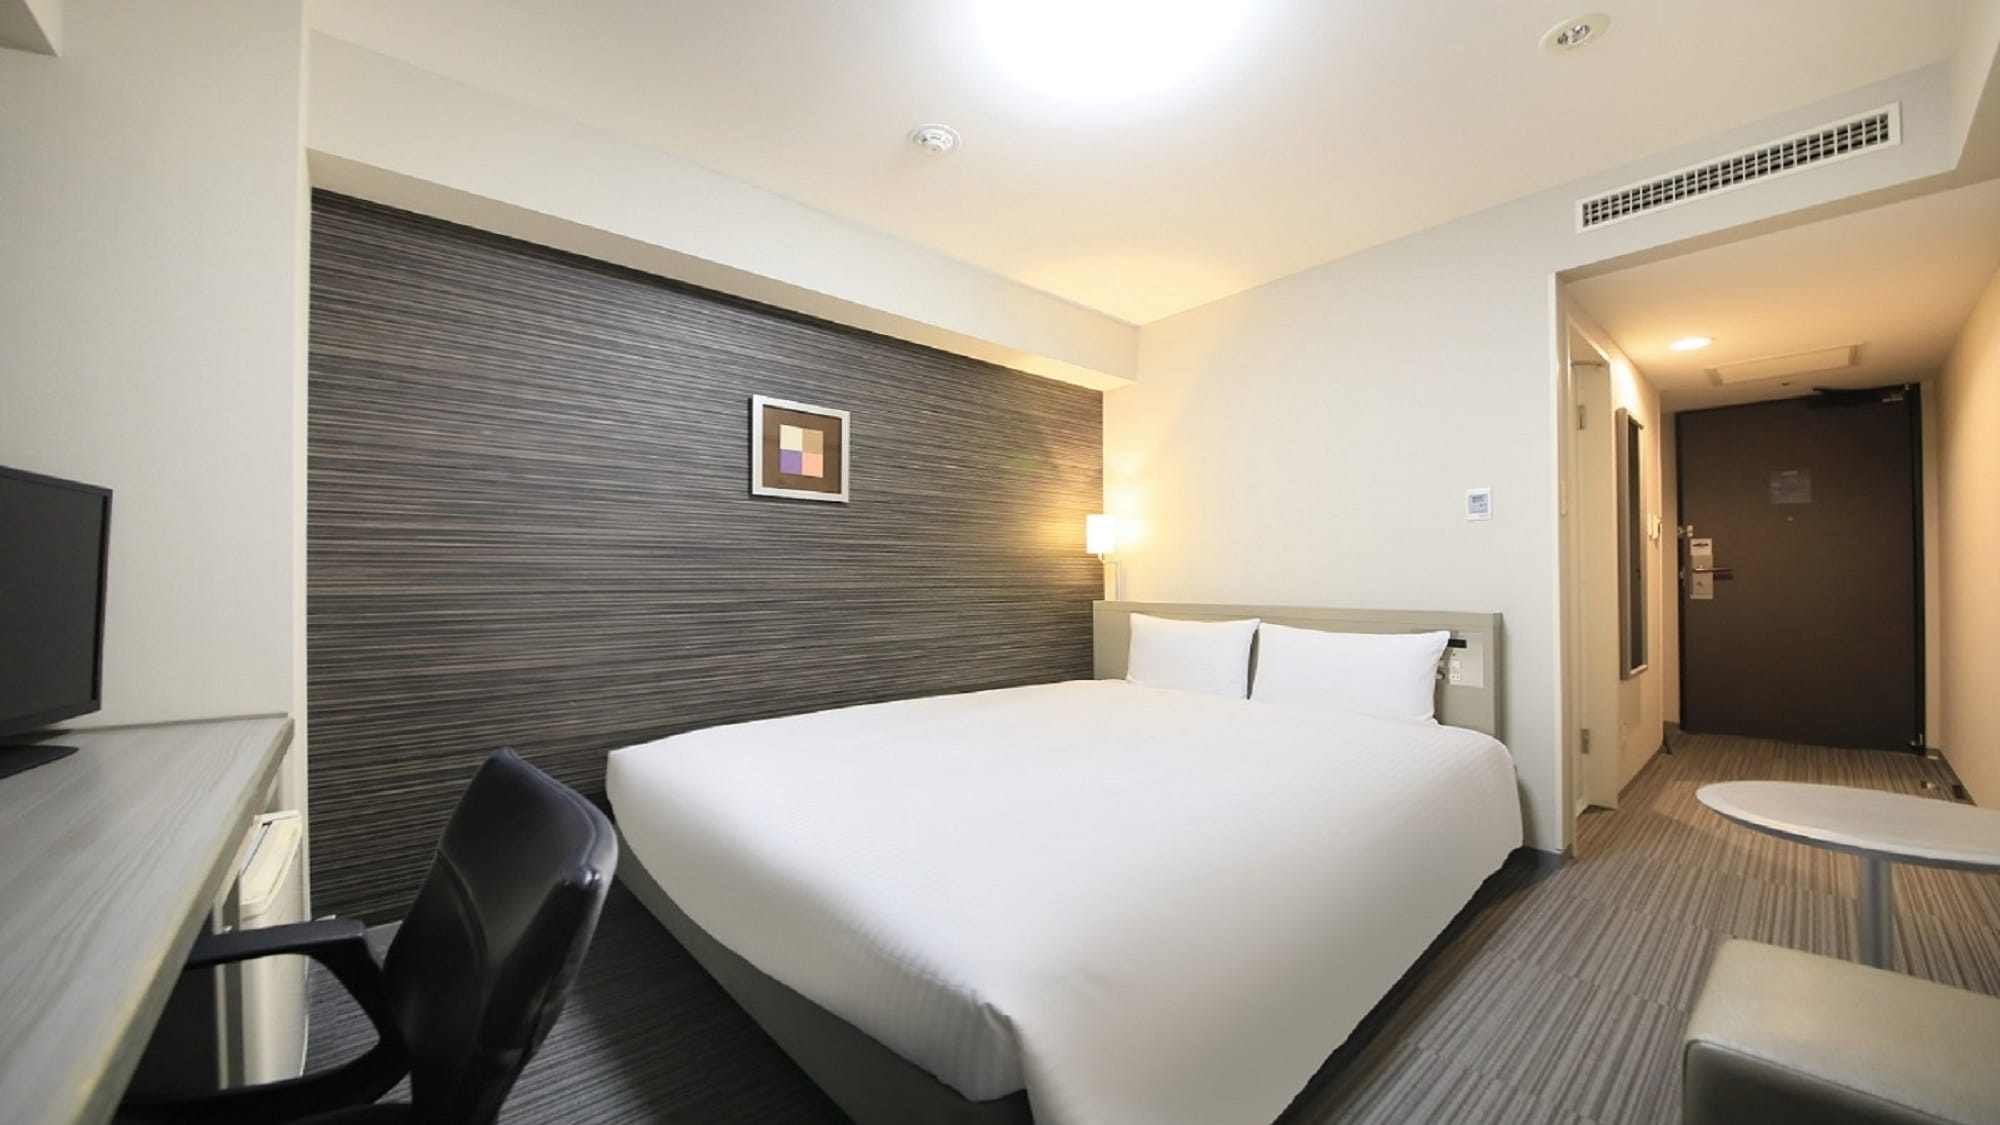 [Standard room] 18㎡ / 154cm wide bed